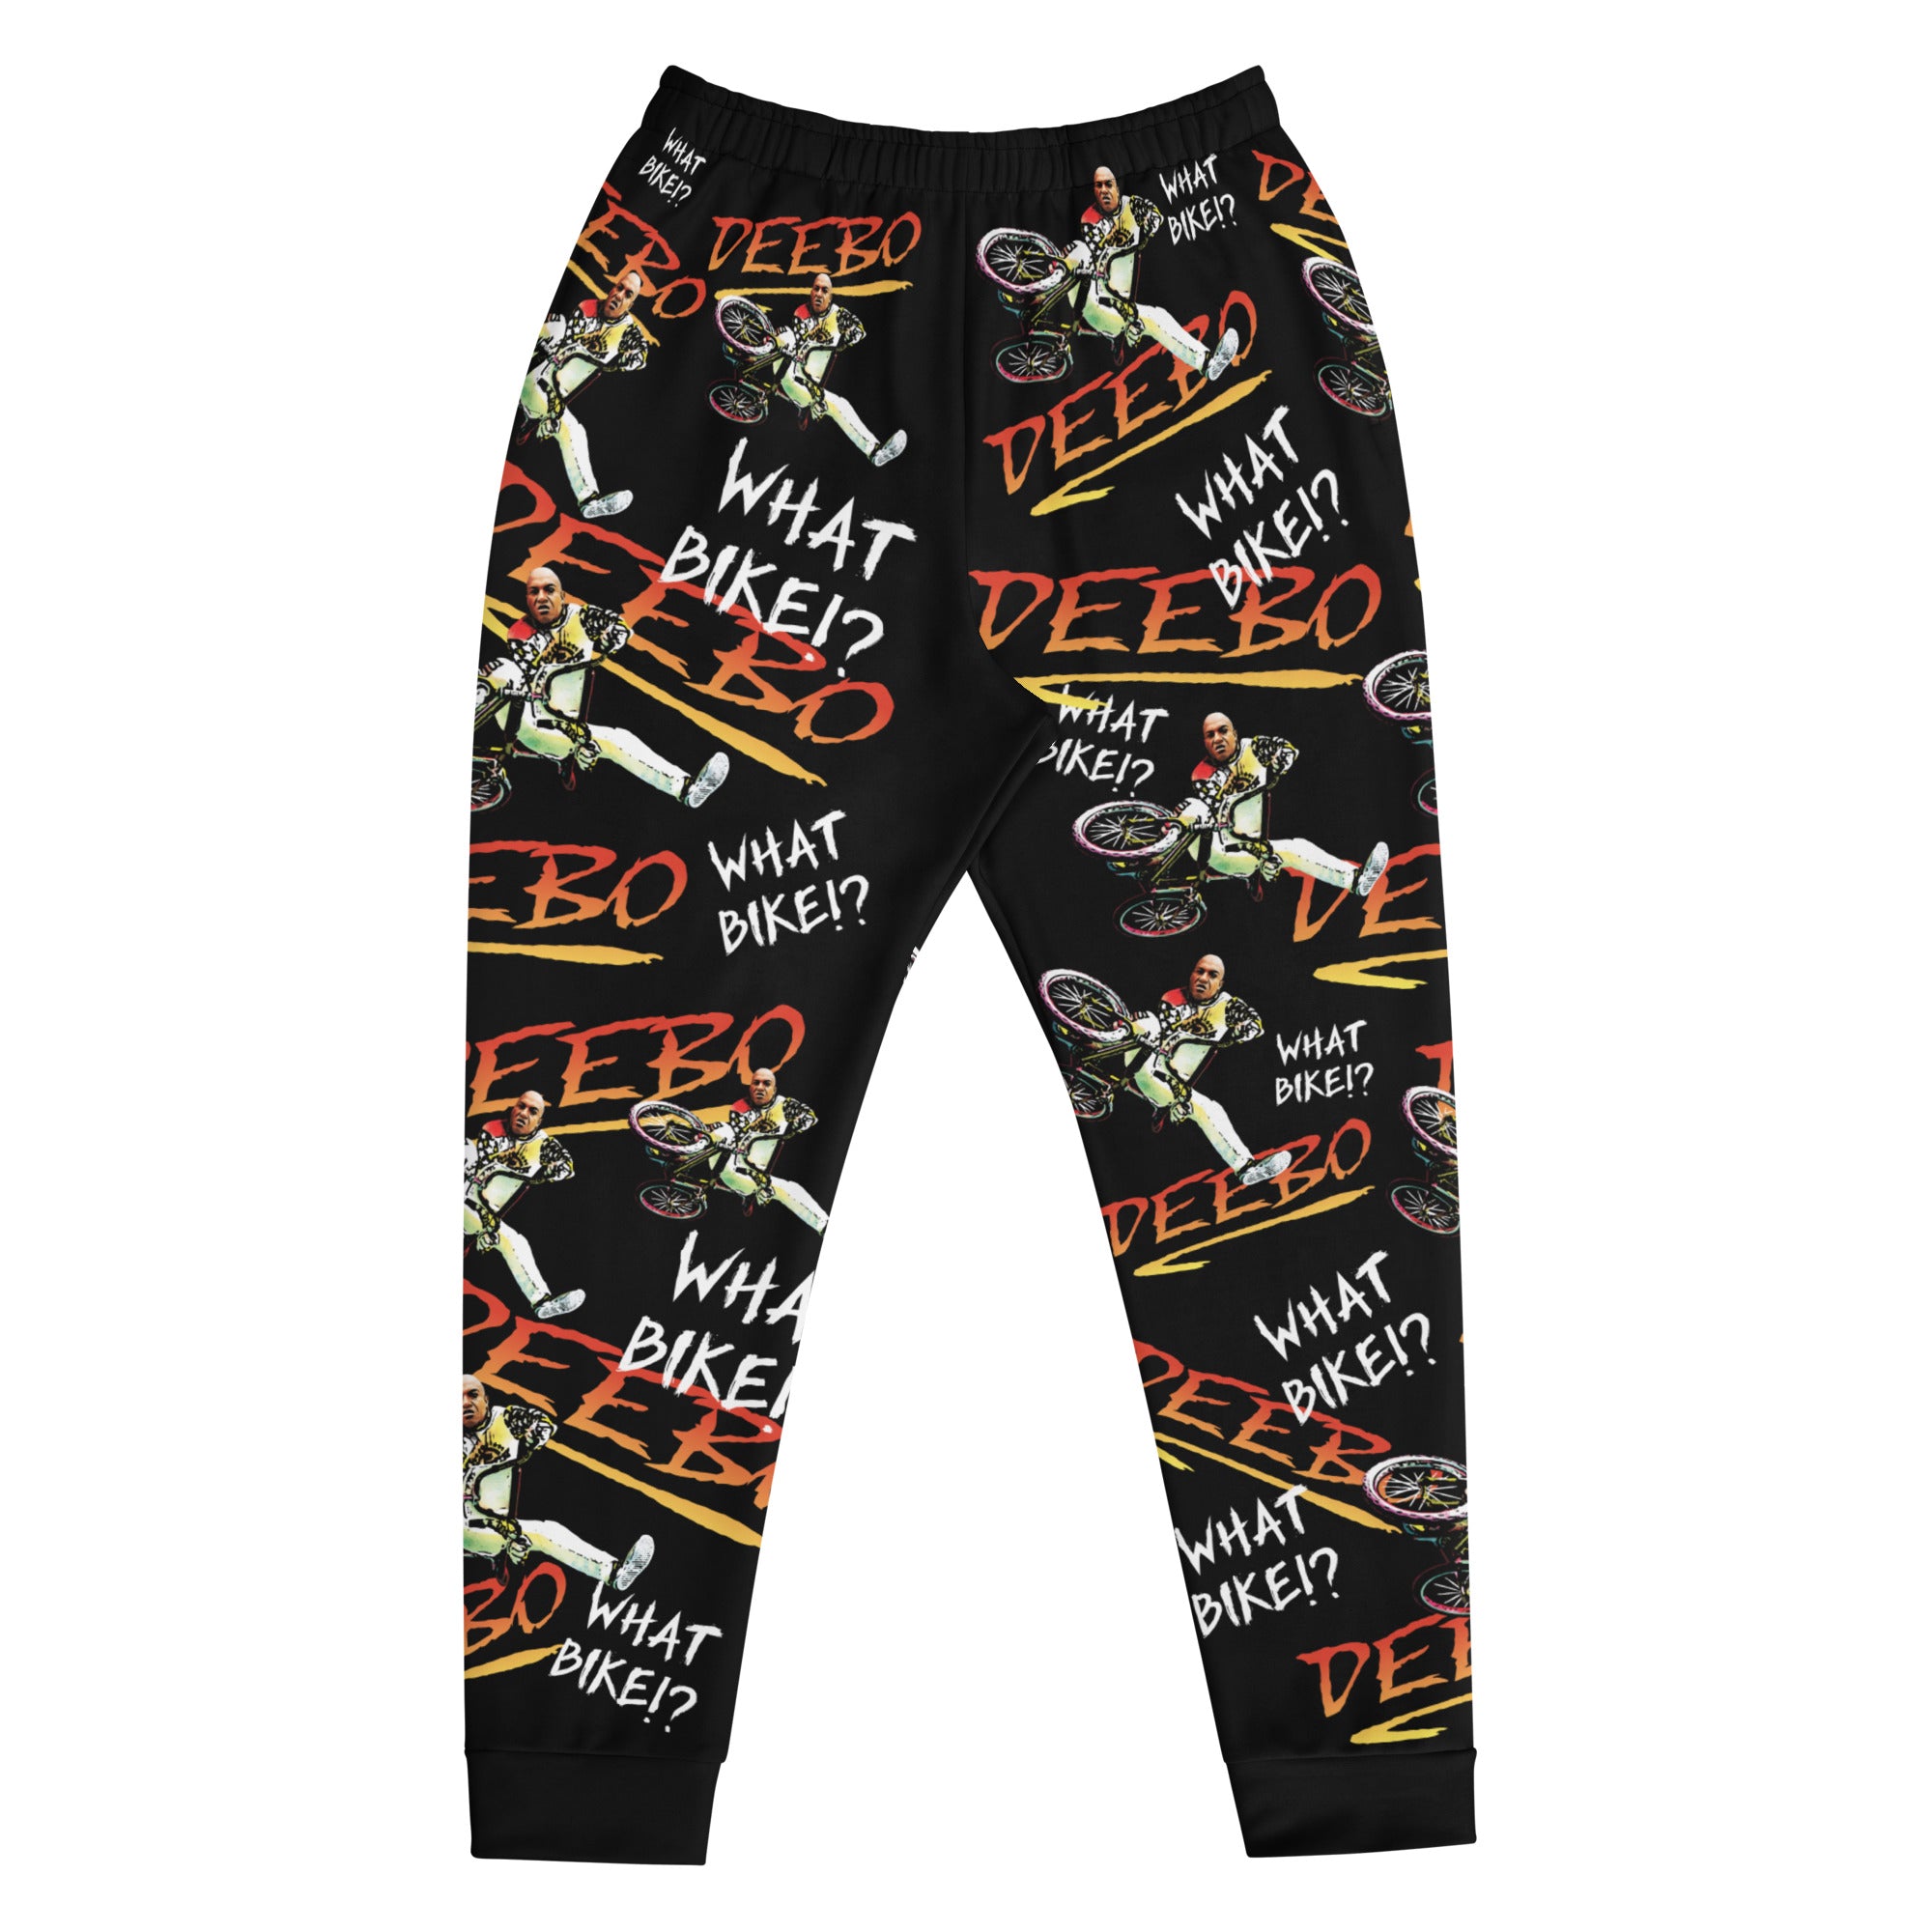 Deebo + RAD BMX Bike Parody Mashup - Pajama Lounge Pants